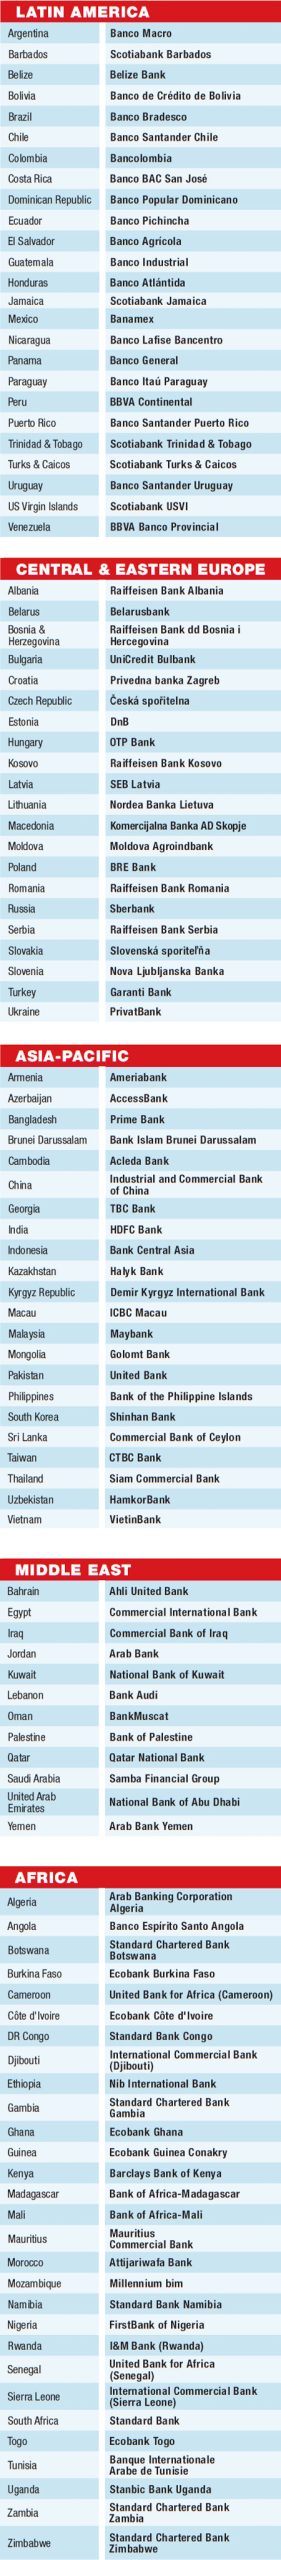 01d-world-best-banks-country-winners-emerging-markets